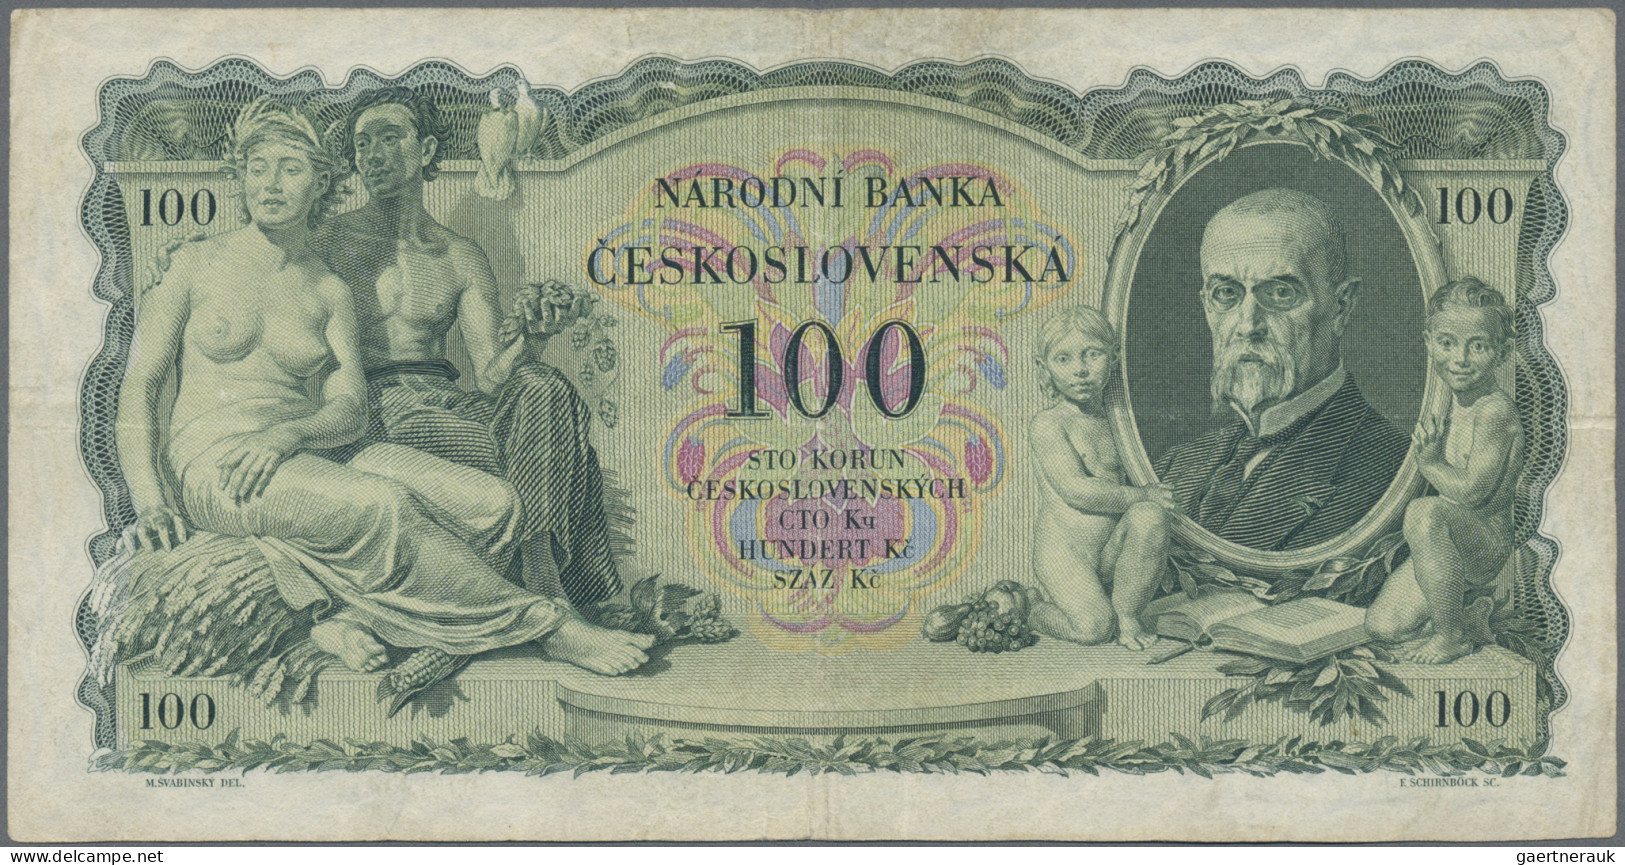 Czechoslovakia: Narodná Banka Československá, lot with 4 banknotes, series 1929-